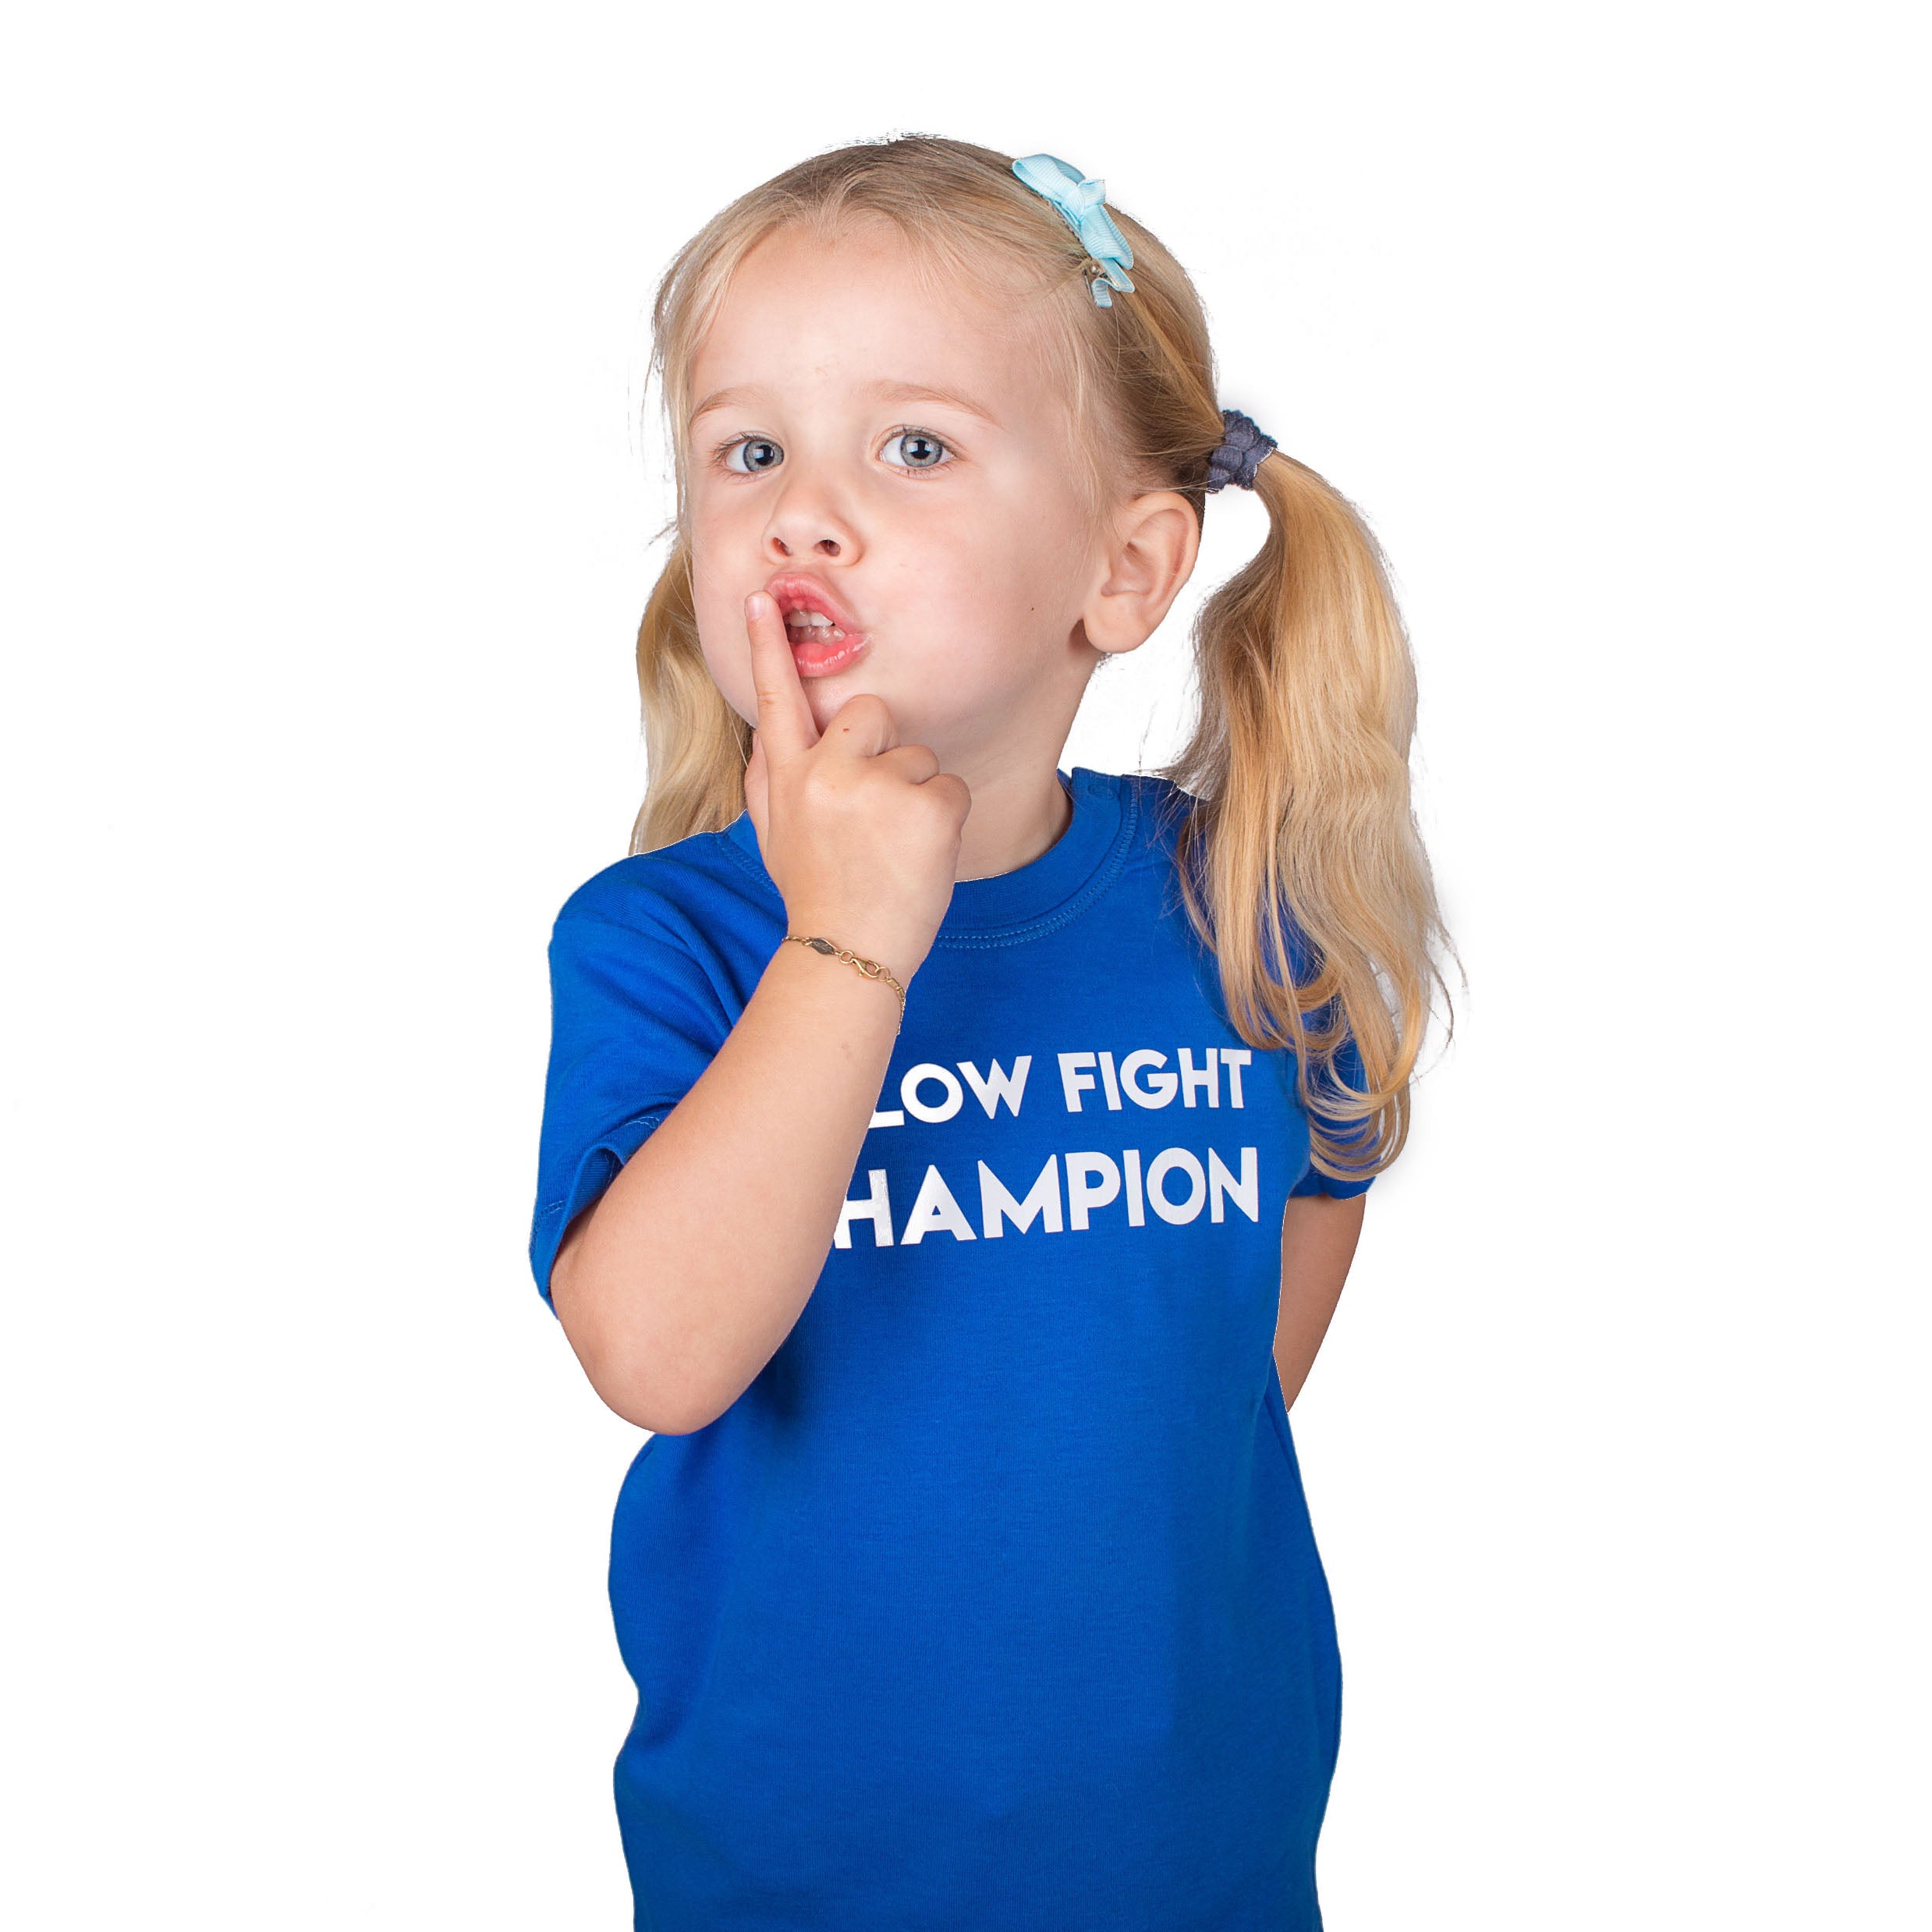 'Pillow fight champion' baby shortsleeve shirt